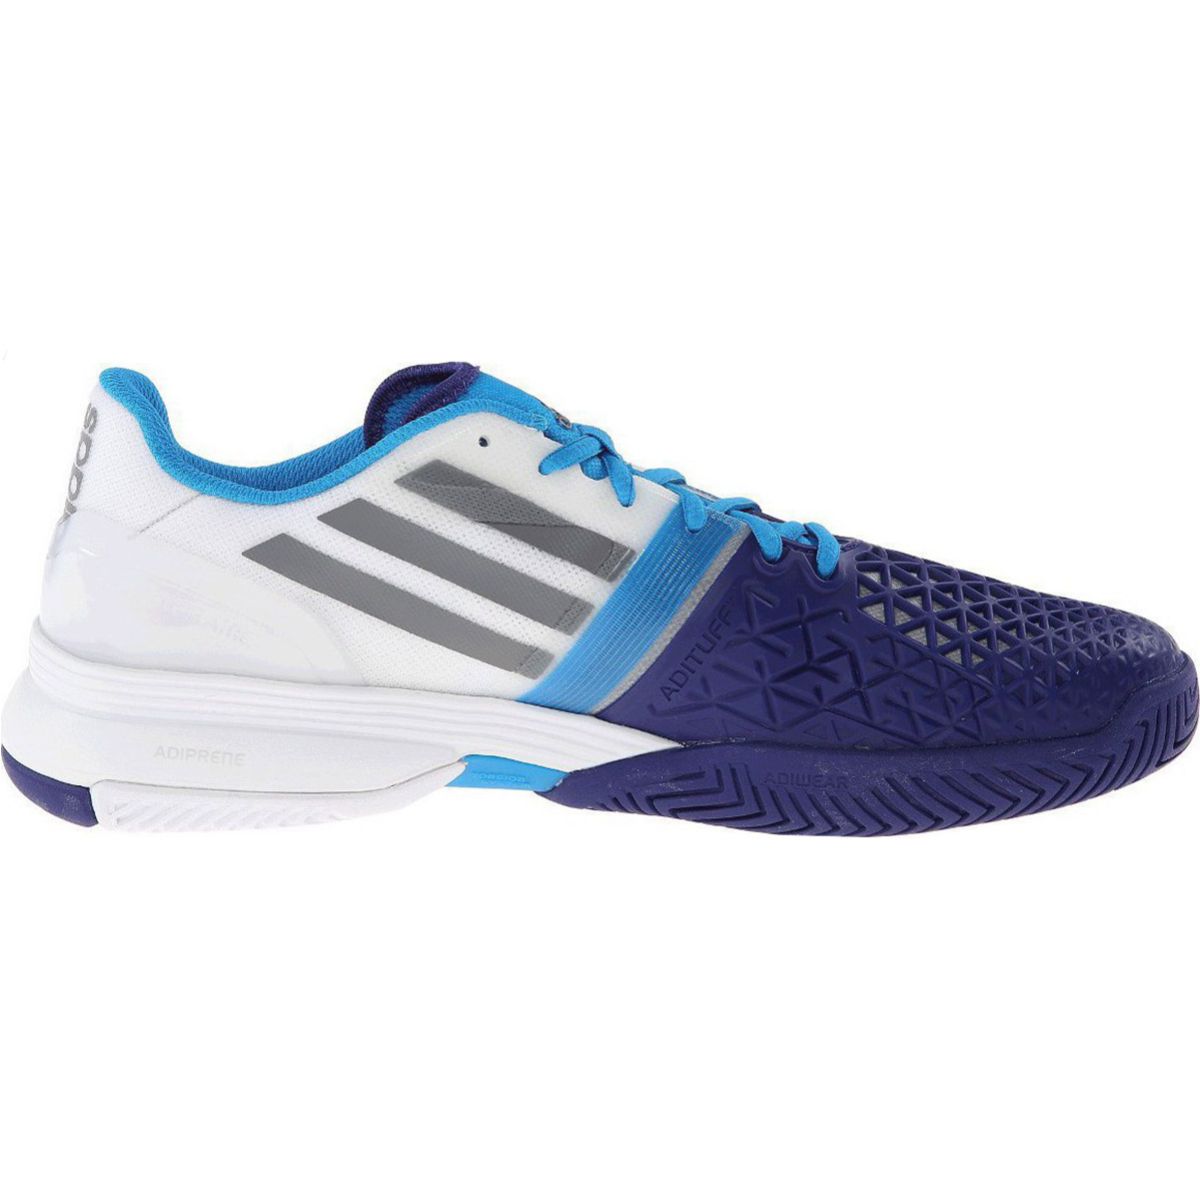 Adidas Adizero Feather III Mens Tennis Shoes B34293